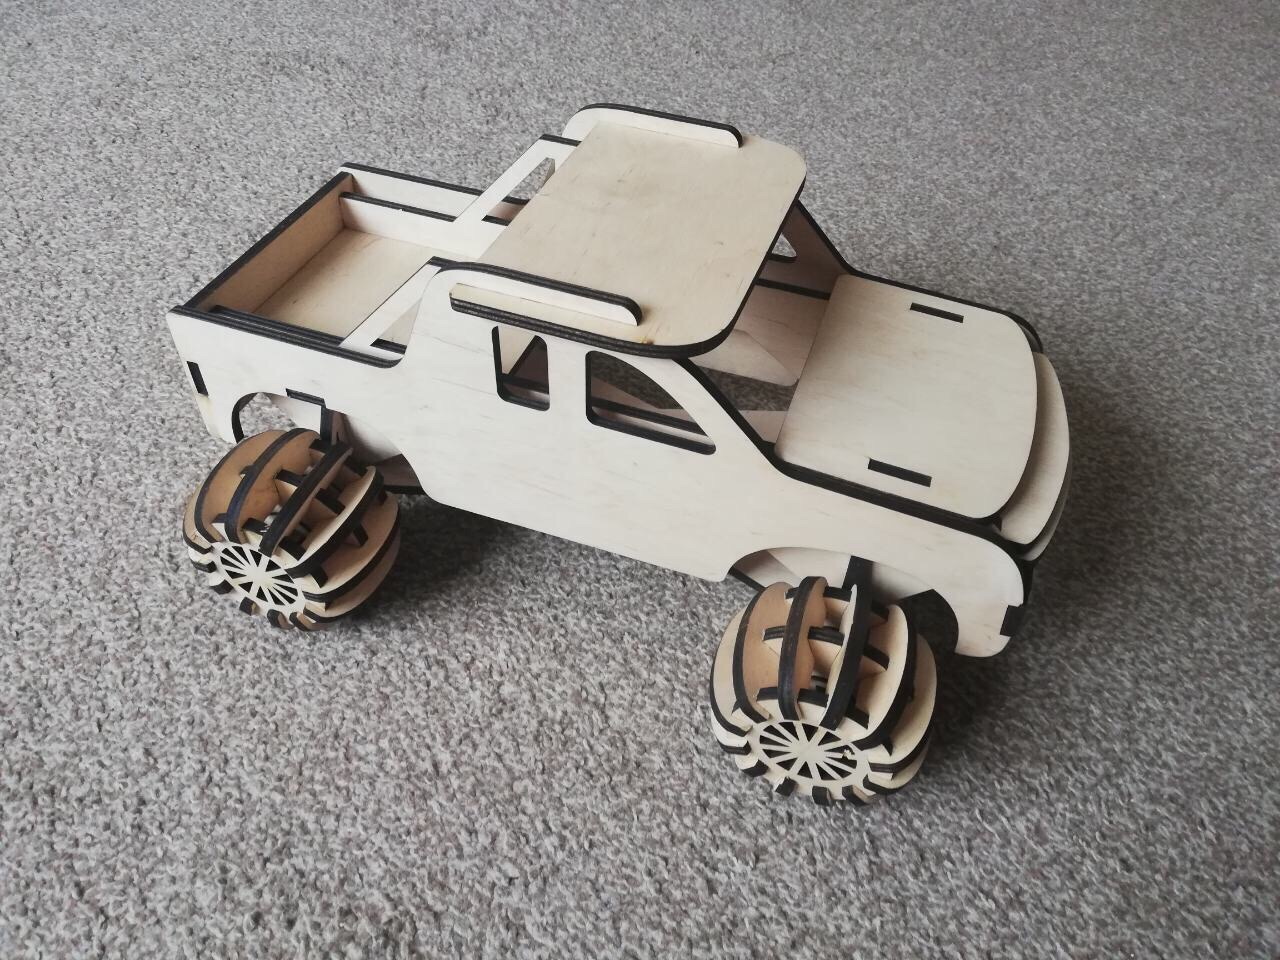 Laser Cut Wooden Toy Truck 3D Model Free Vector